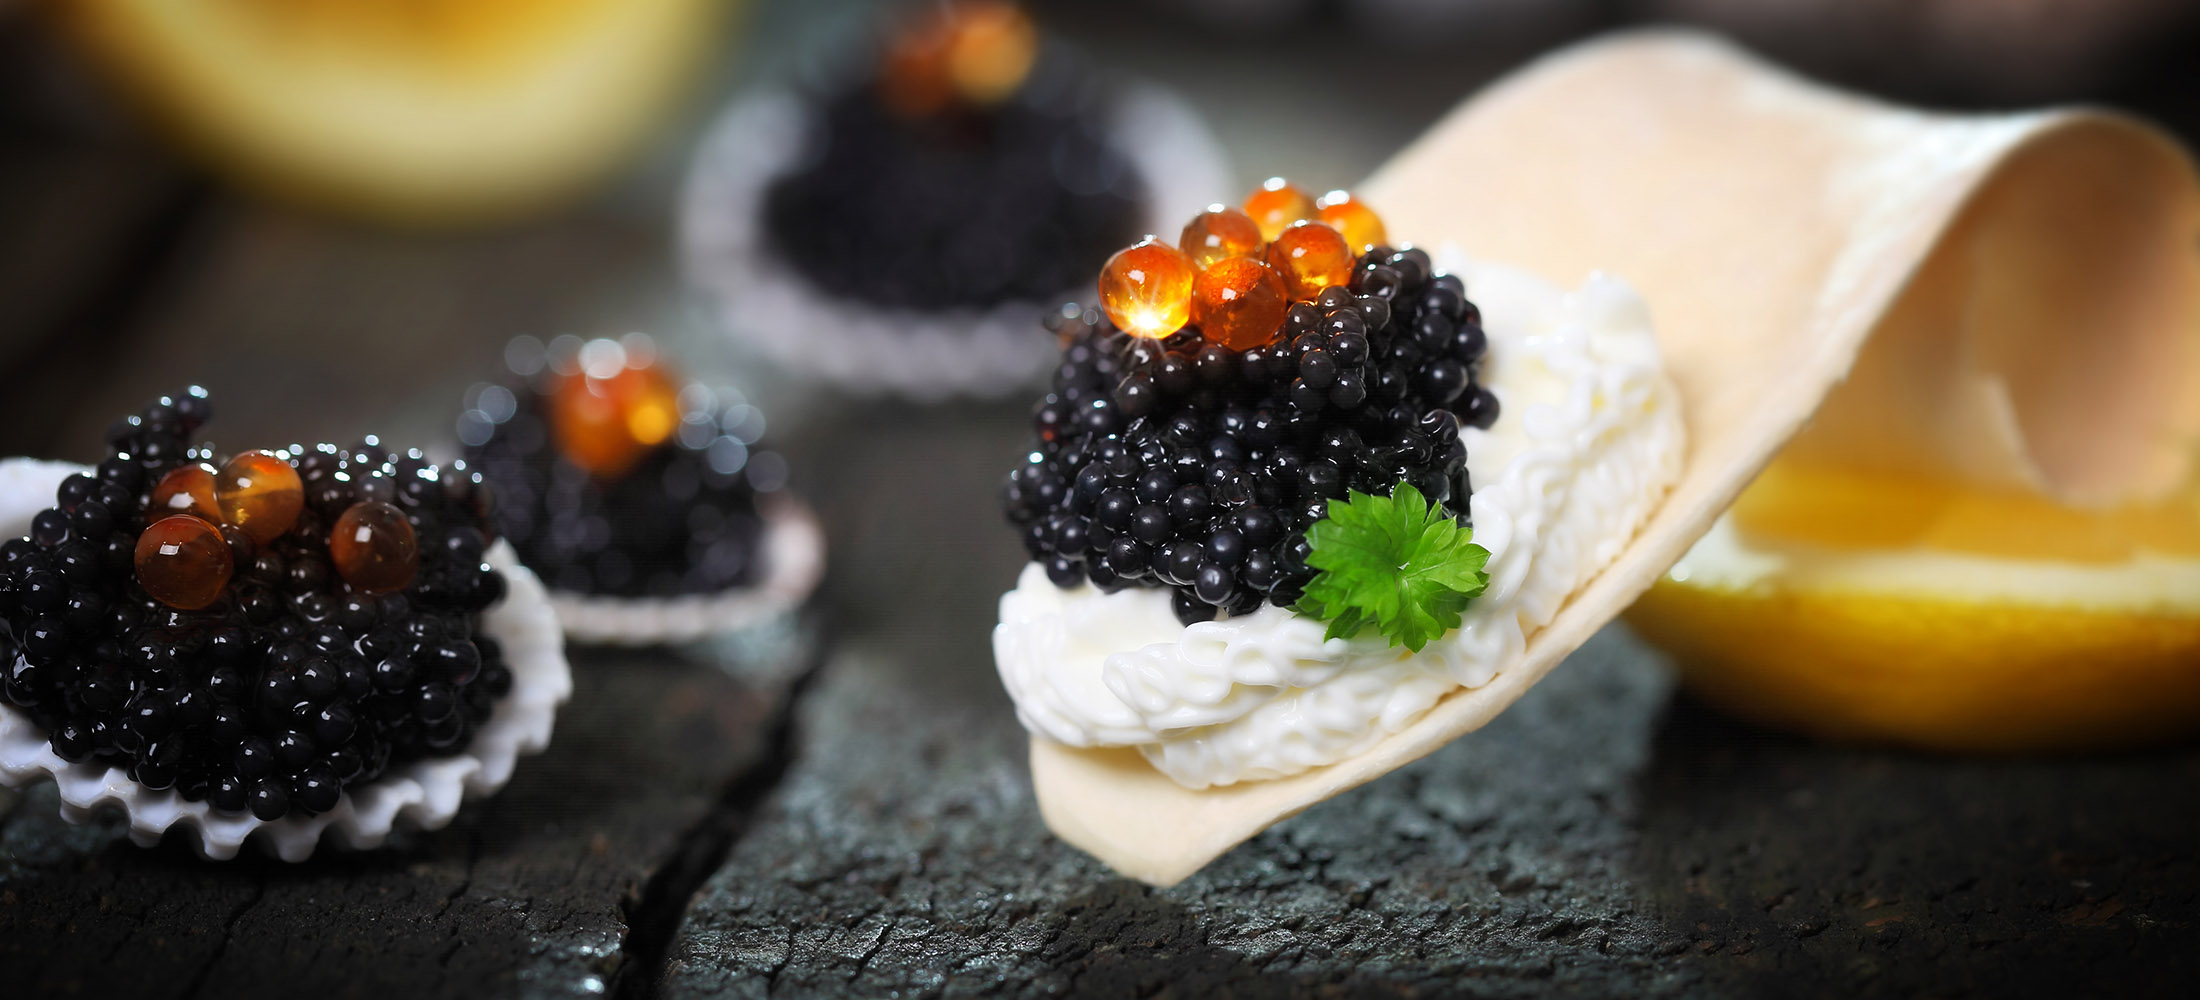 Perang Dagang Sampai ke Caviar